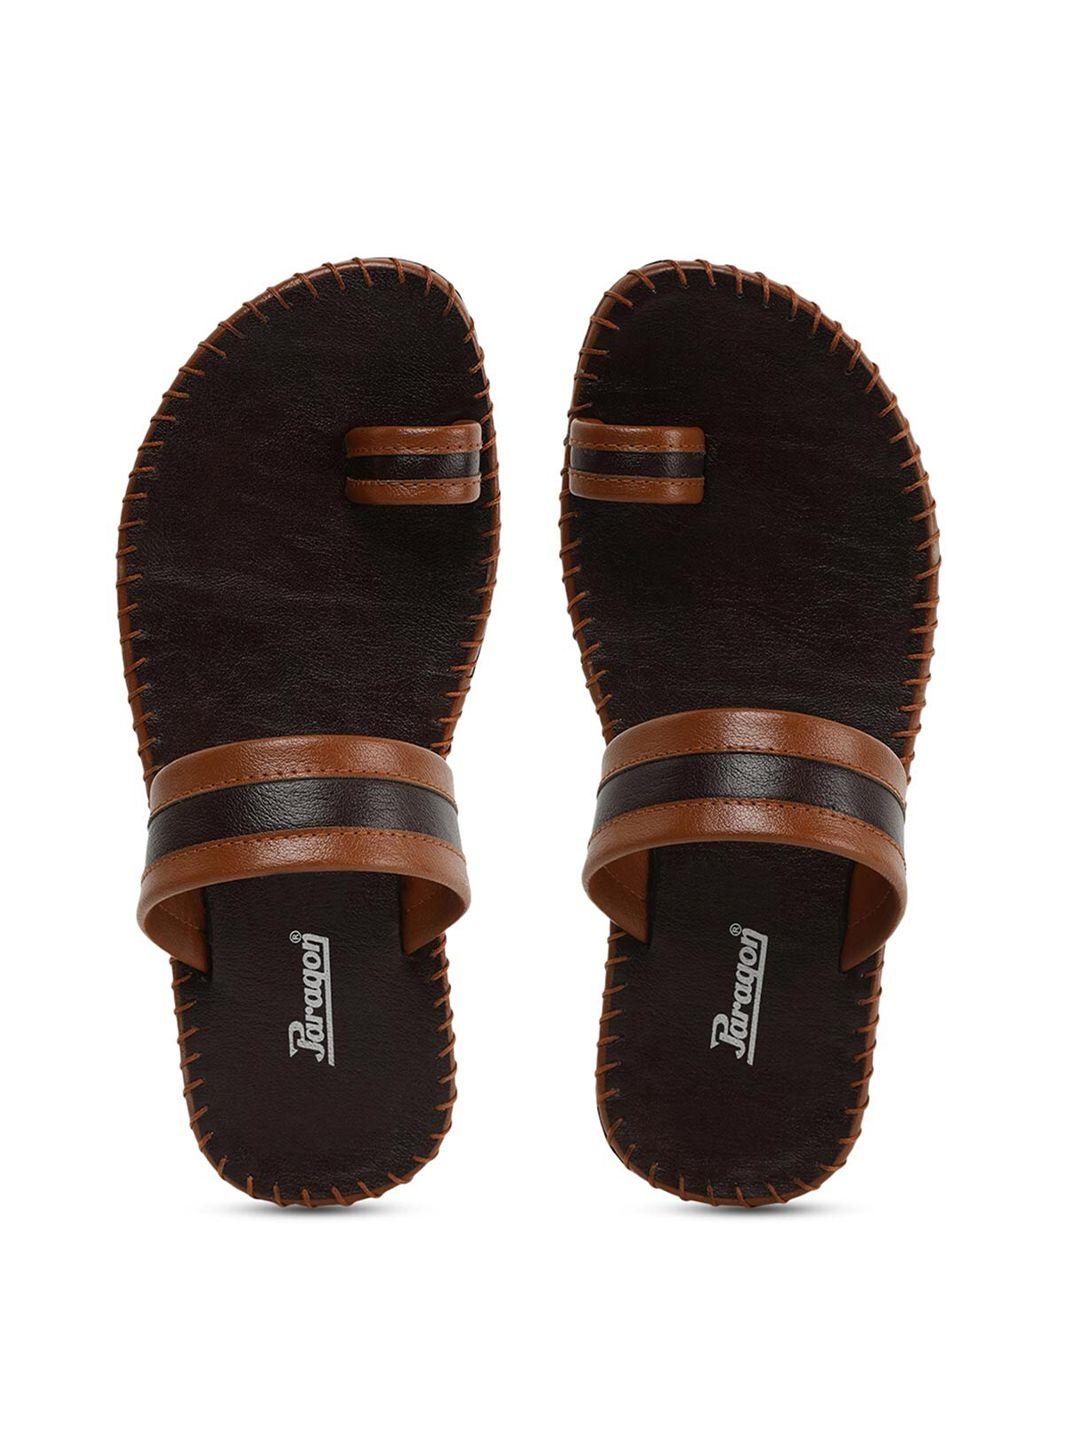 paragon-men-brown-tan-slip-on-comfort-sandals